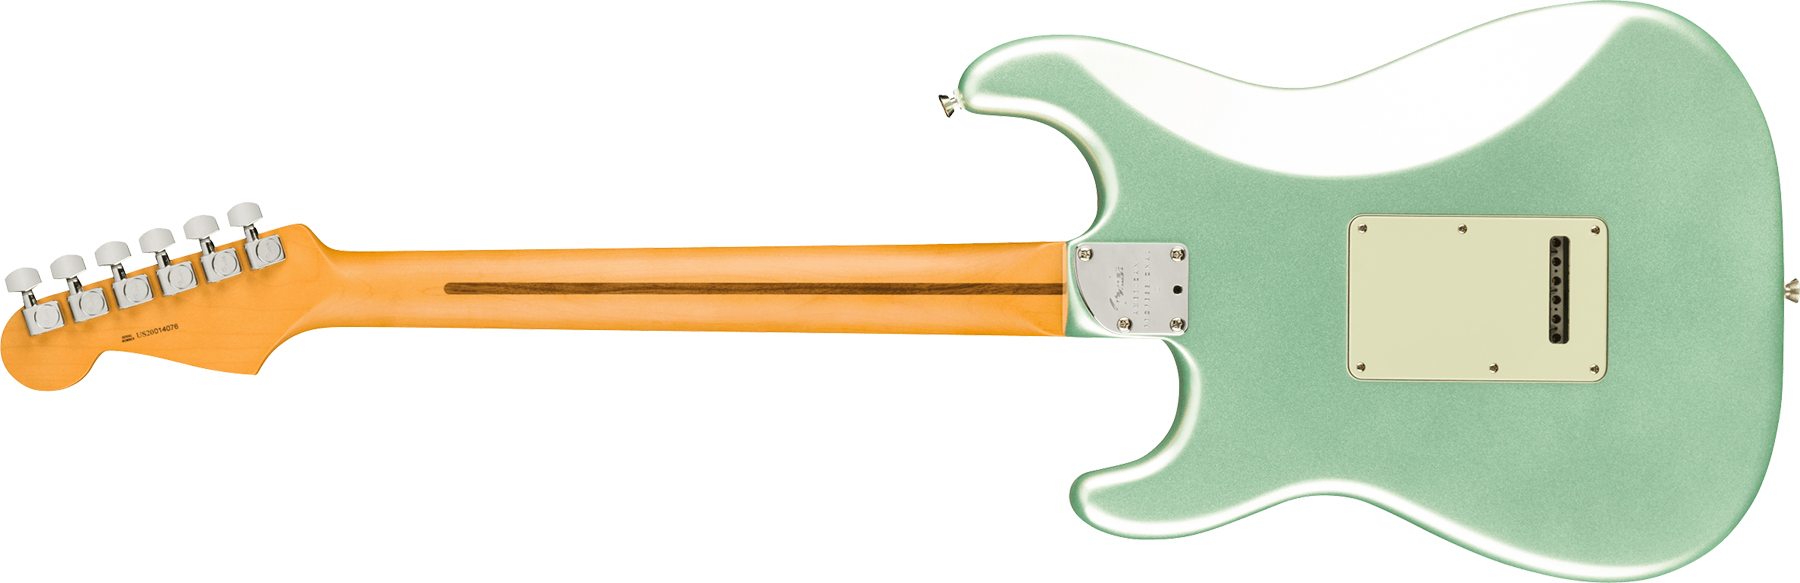 Fender Strat American Professional Ii Usa Rw - Mystic Surf Green - Str shape electric guitar - Variation 1